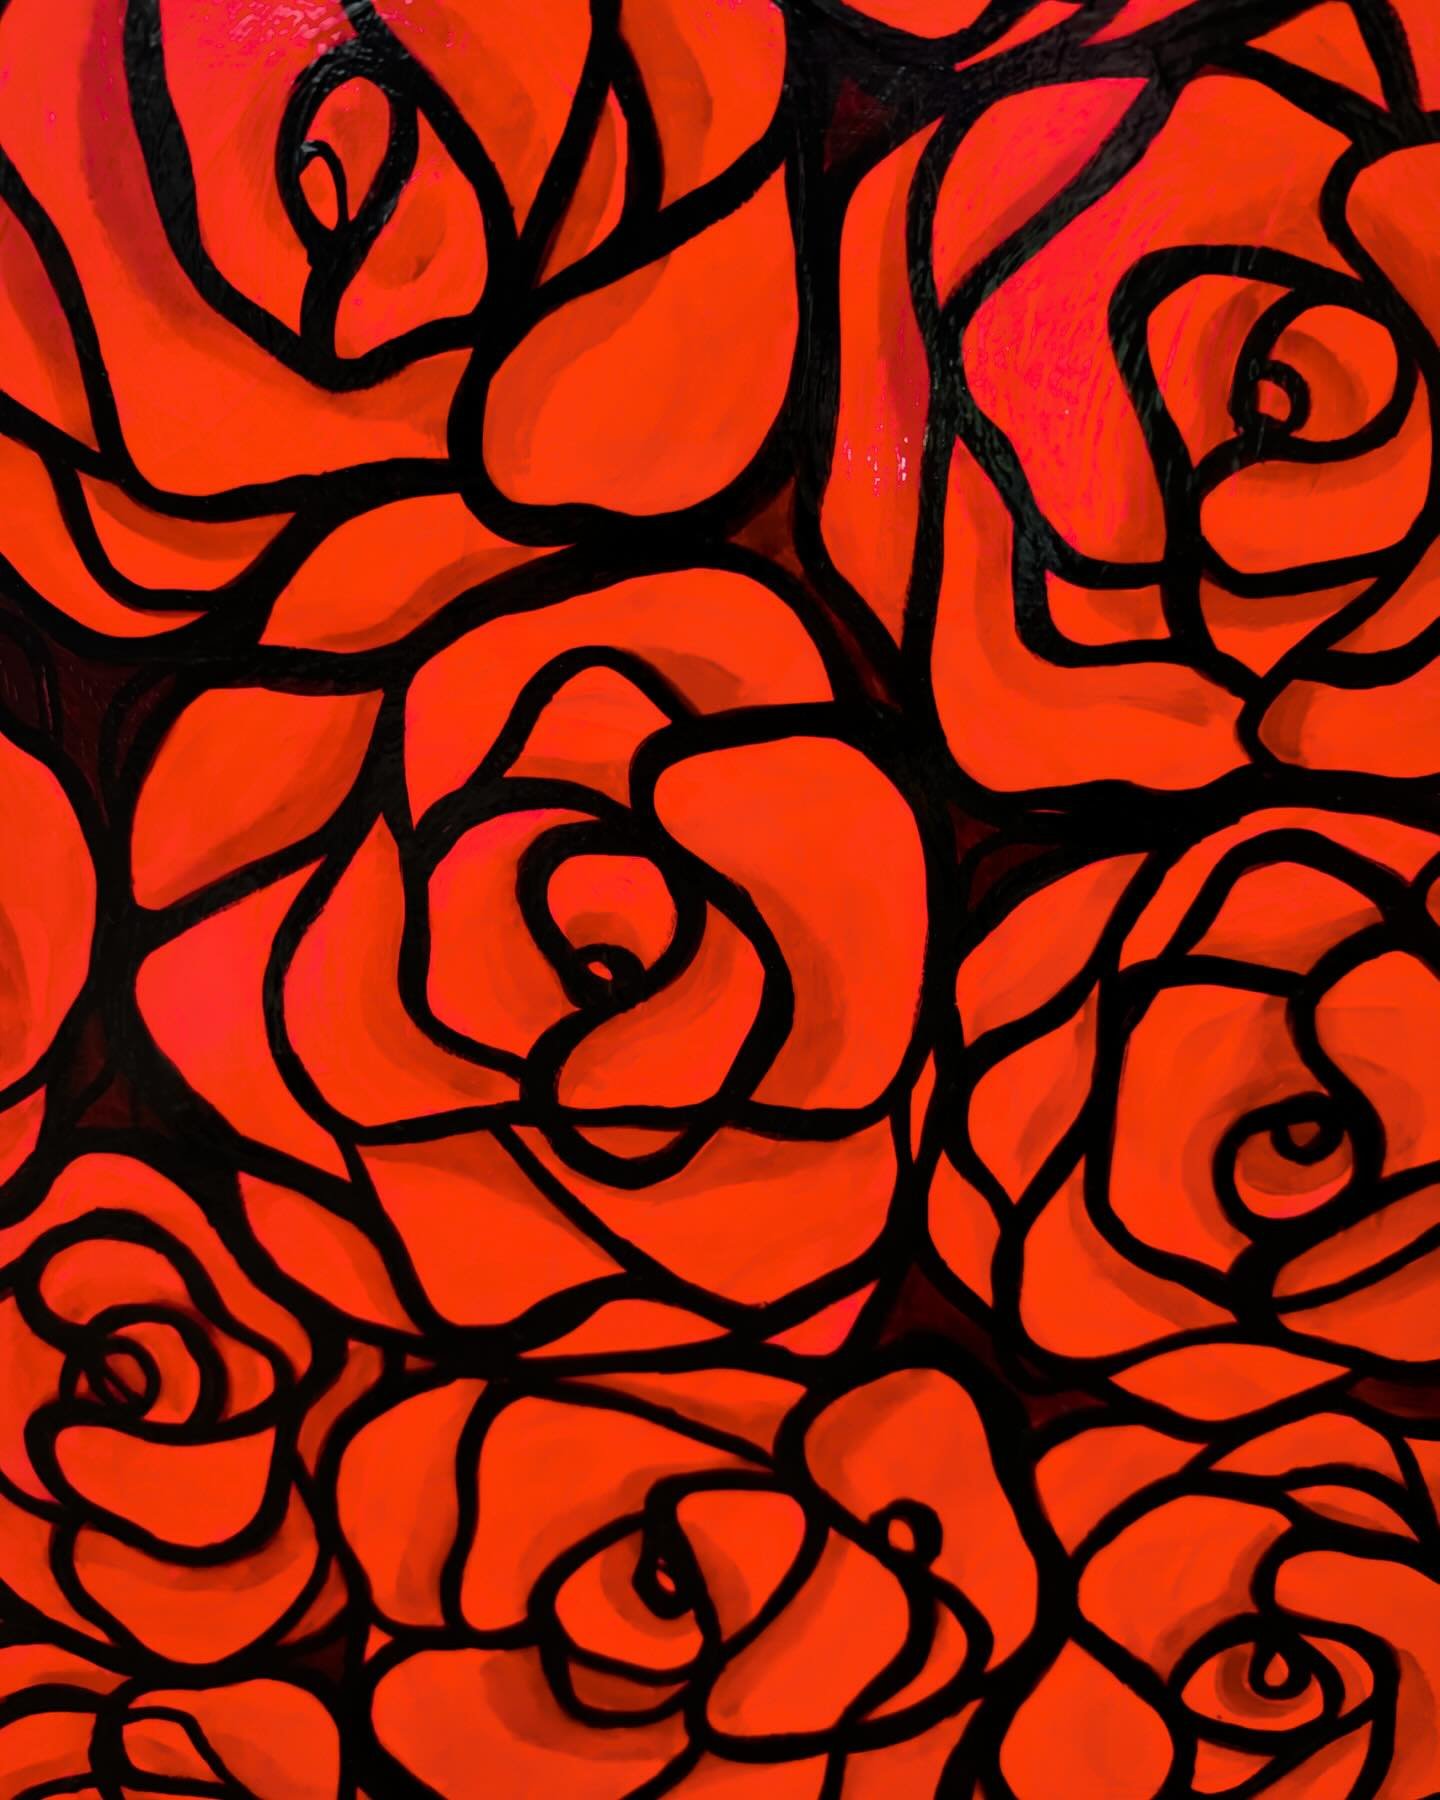 @elizabethmaytonart florals 24 x 24 acrylic on wood panel&hellip; #HappyMothersDay 

#art #artist #artistsoninstagram #painting #floral #floralsforspring #mom #artgallery #rose #mirrorballgallery #🪩